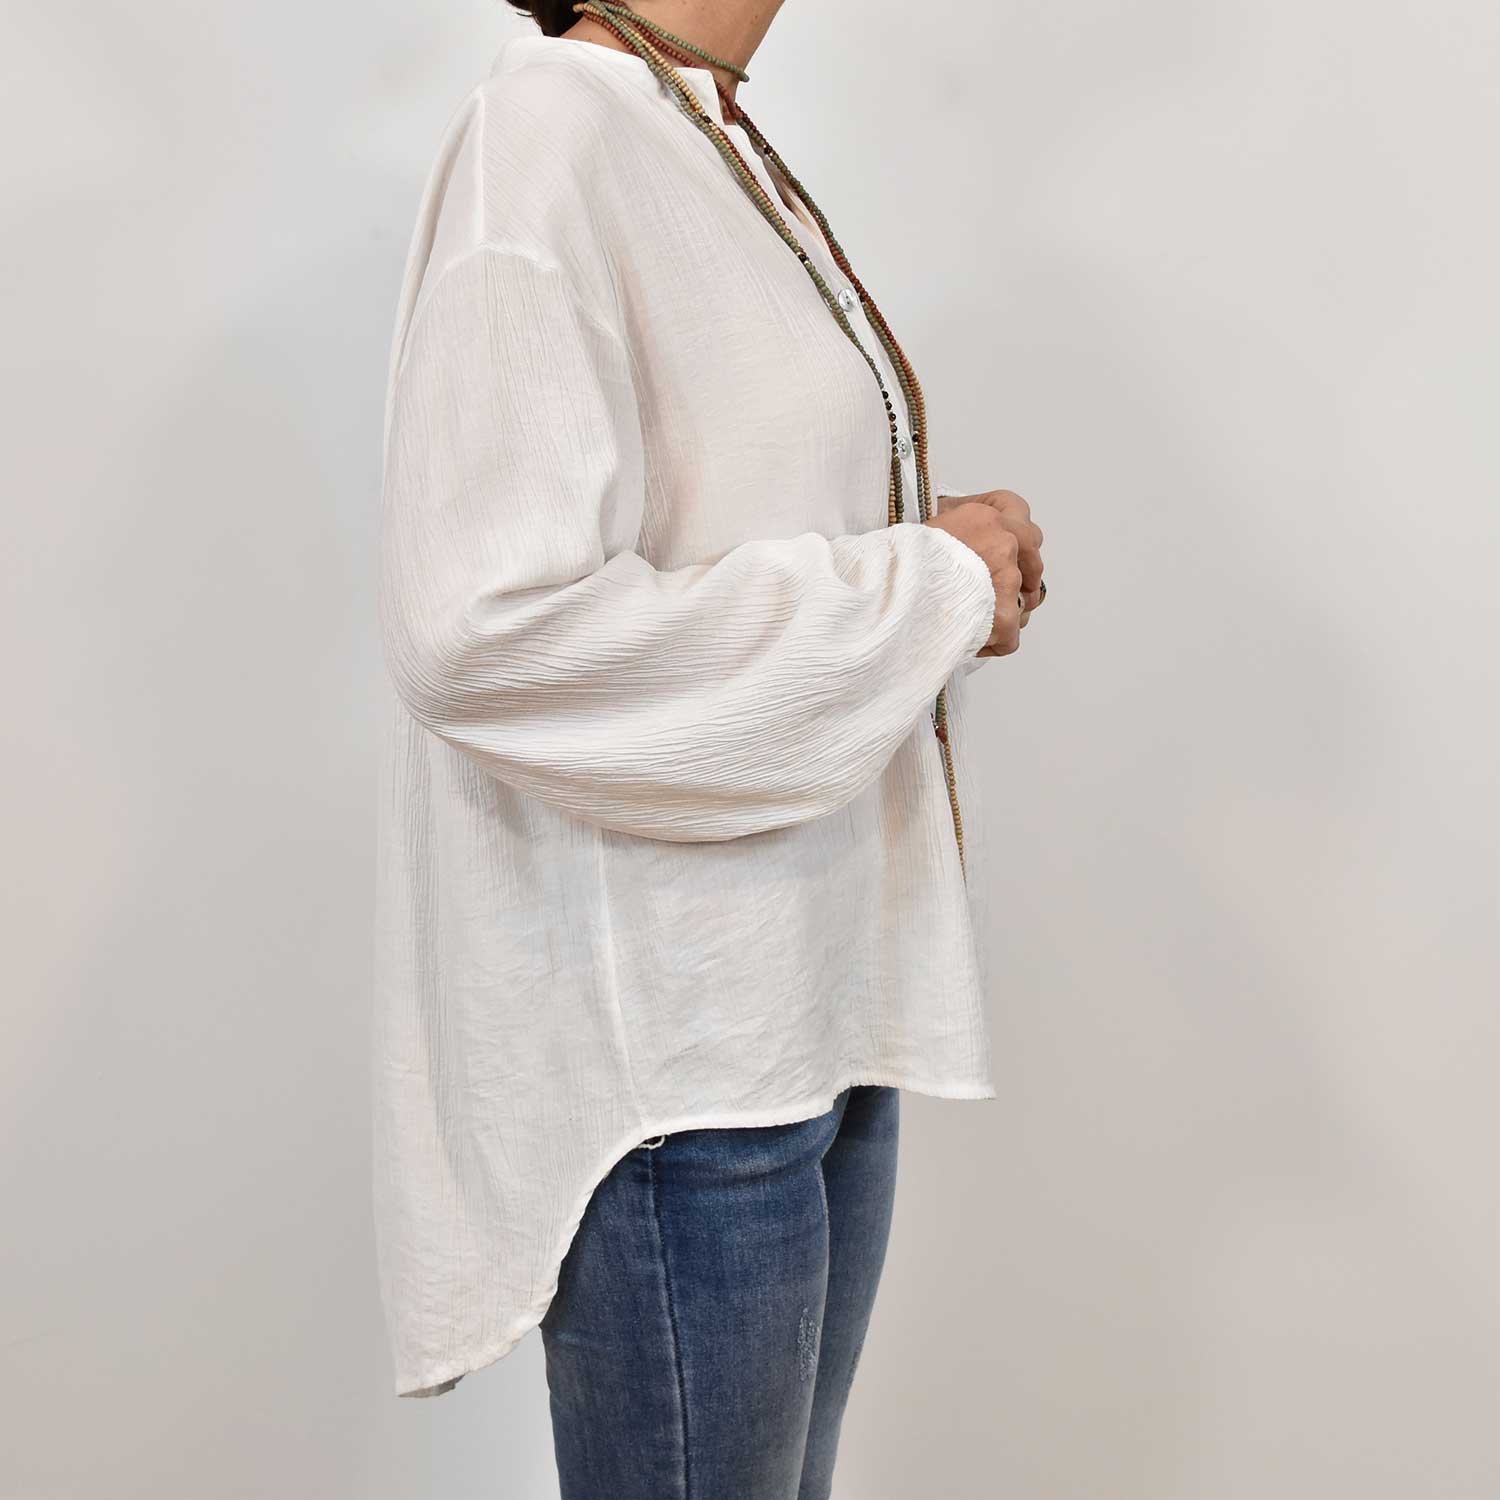 White ruffled blouse